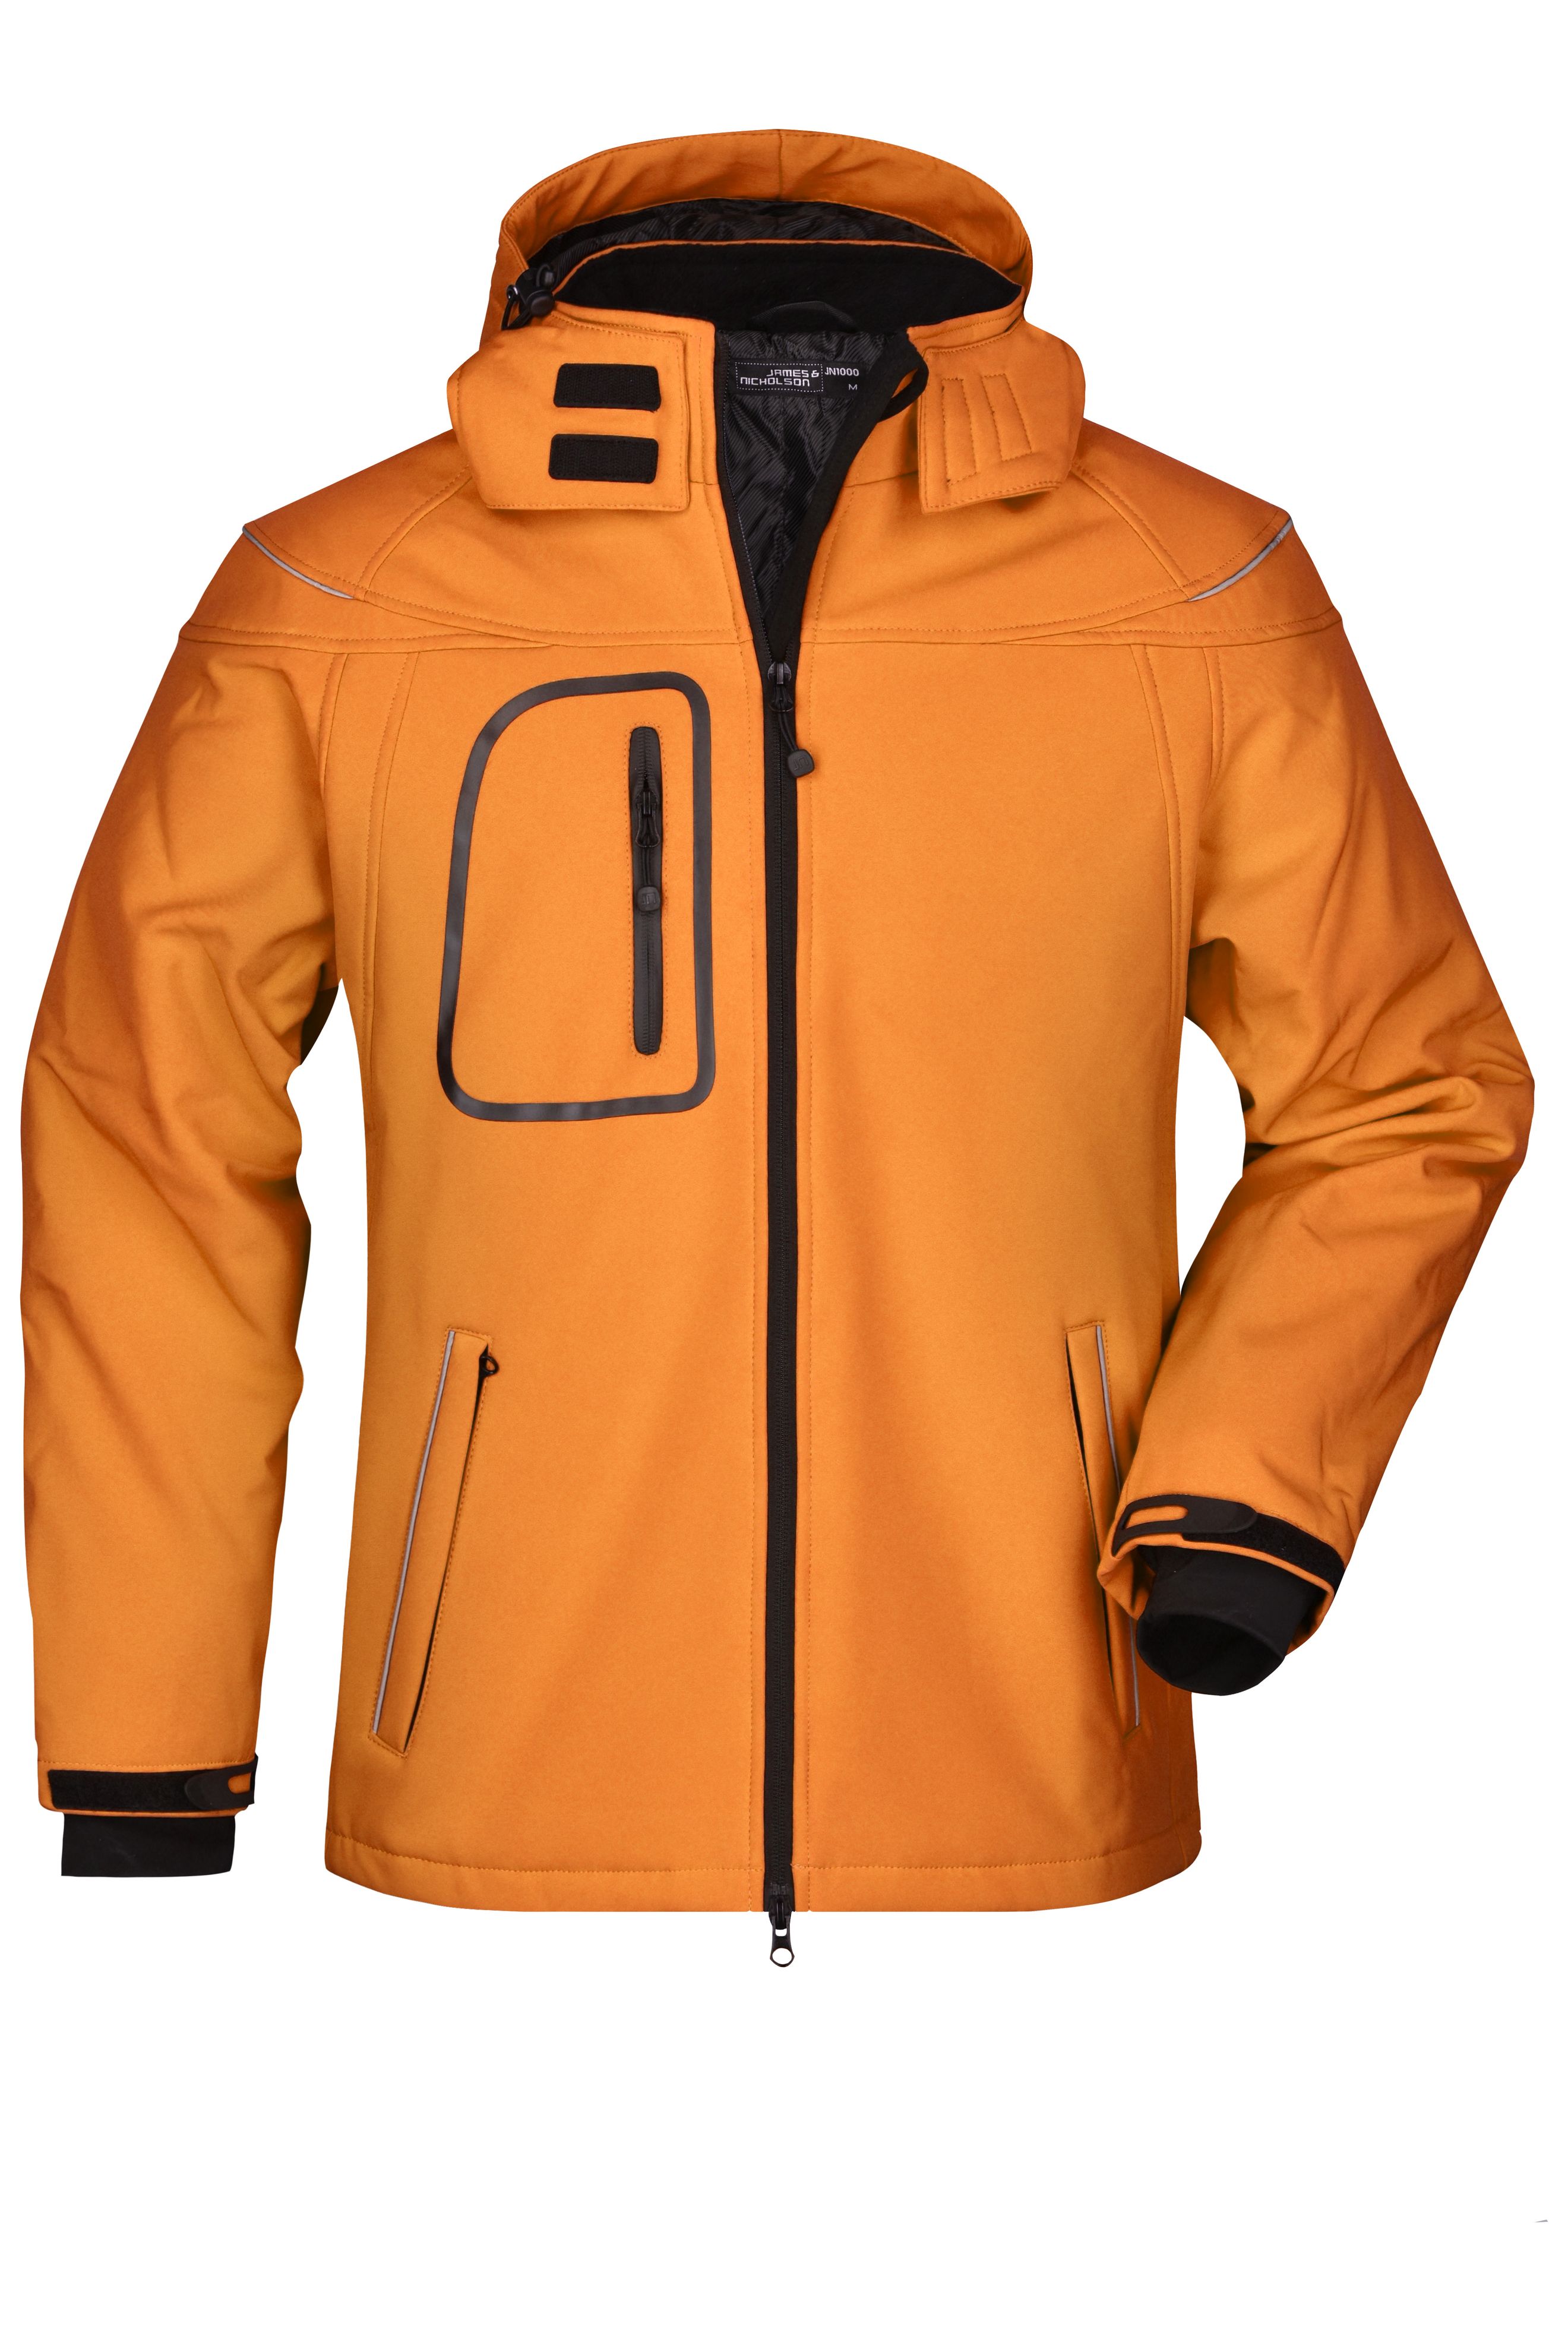 Men Men's Winter Softshell Jacket Orange-Daiber